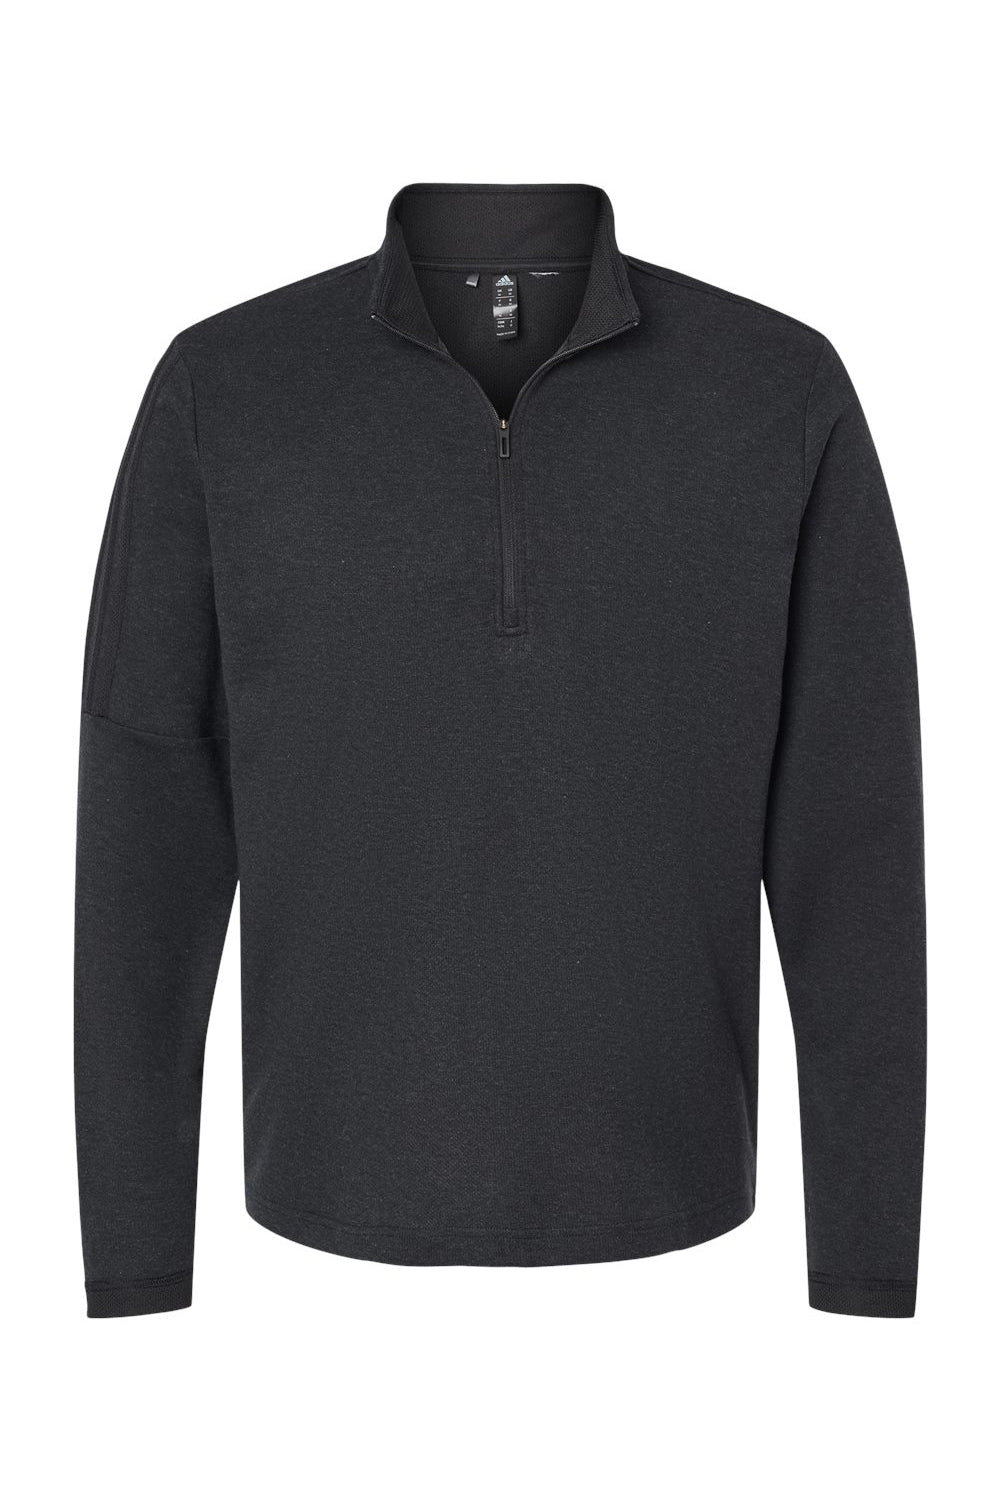 Adidas A554 Mens 3 Stripes Moisture Wicking 1/4 Zip Sweater Black Melange Flat Front